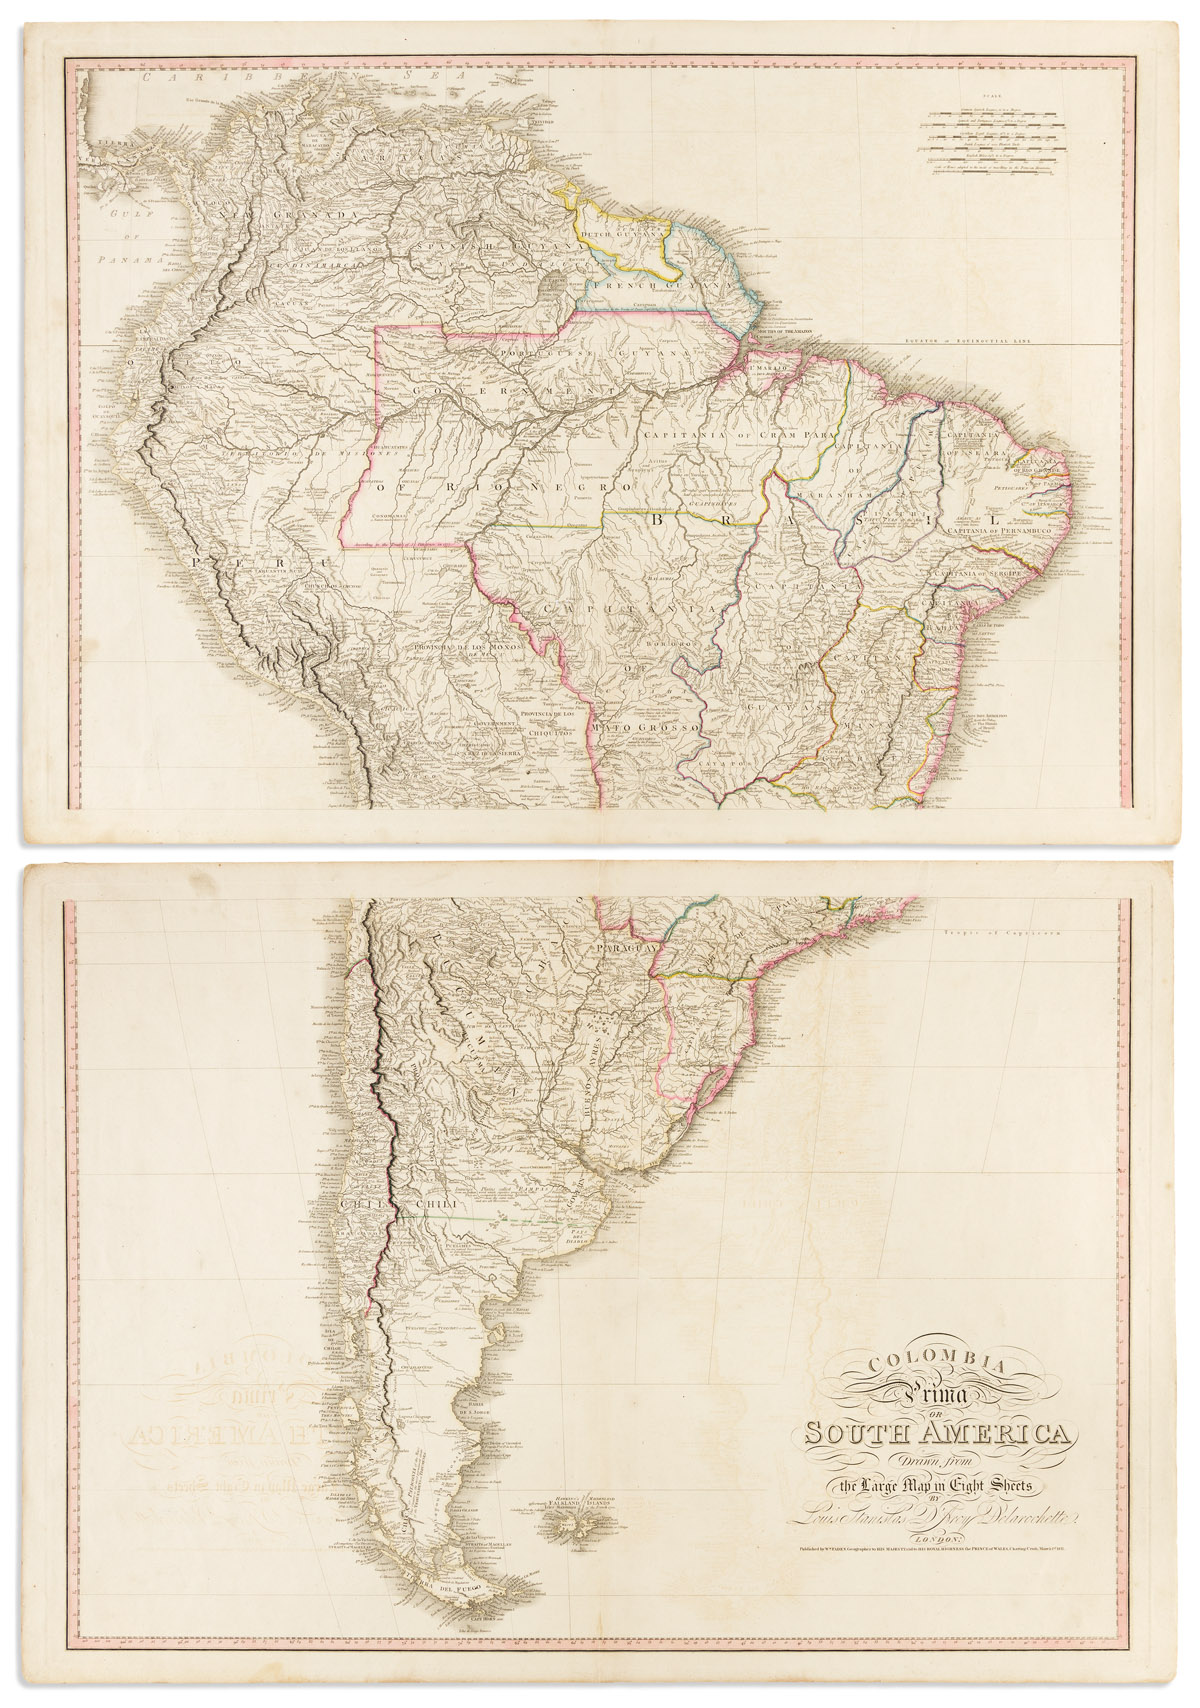 Colombia Prima or South America